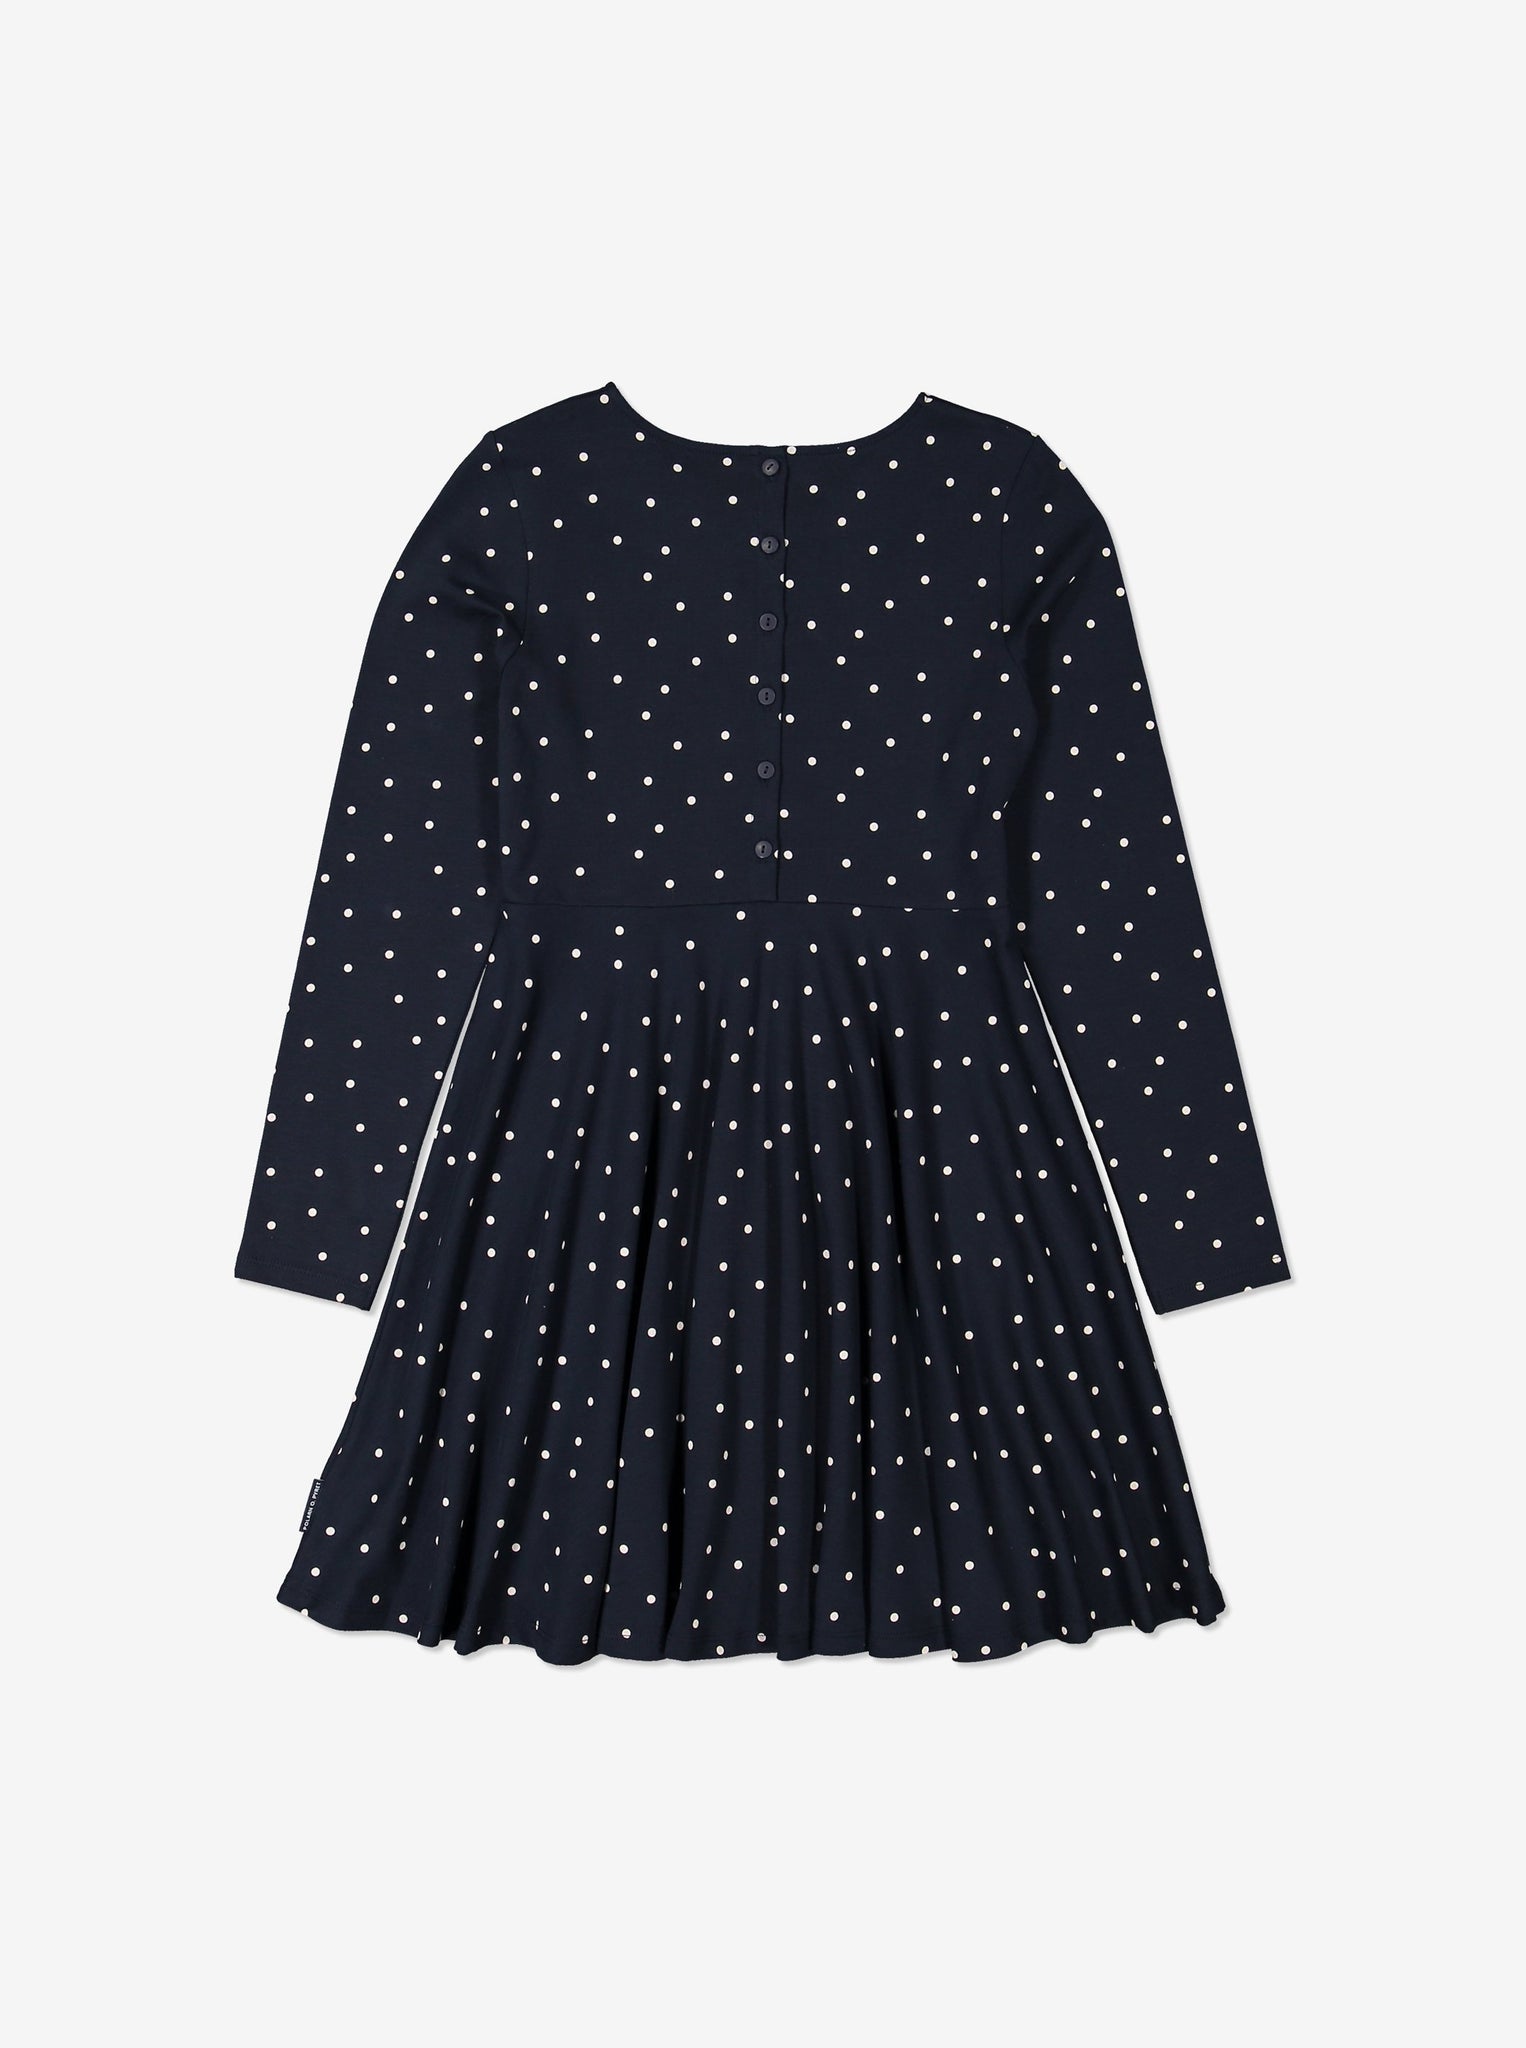 Organic Cotton Polka Dot Print Kids Dress 6-12years Navy Girl